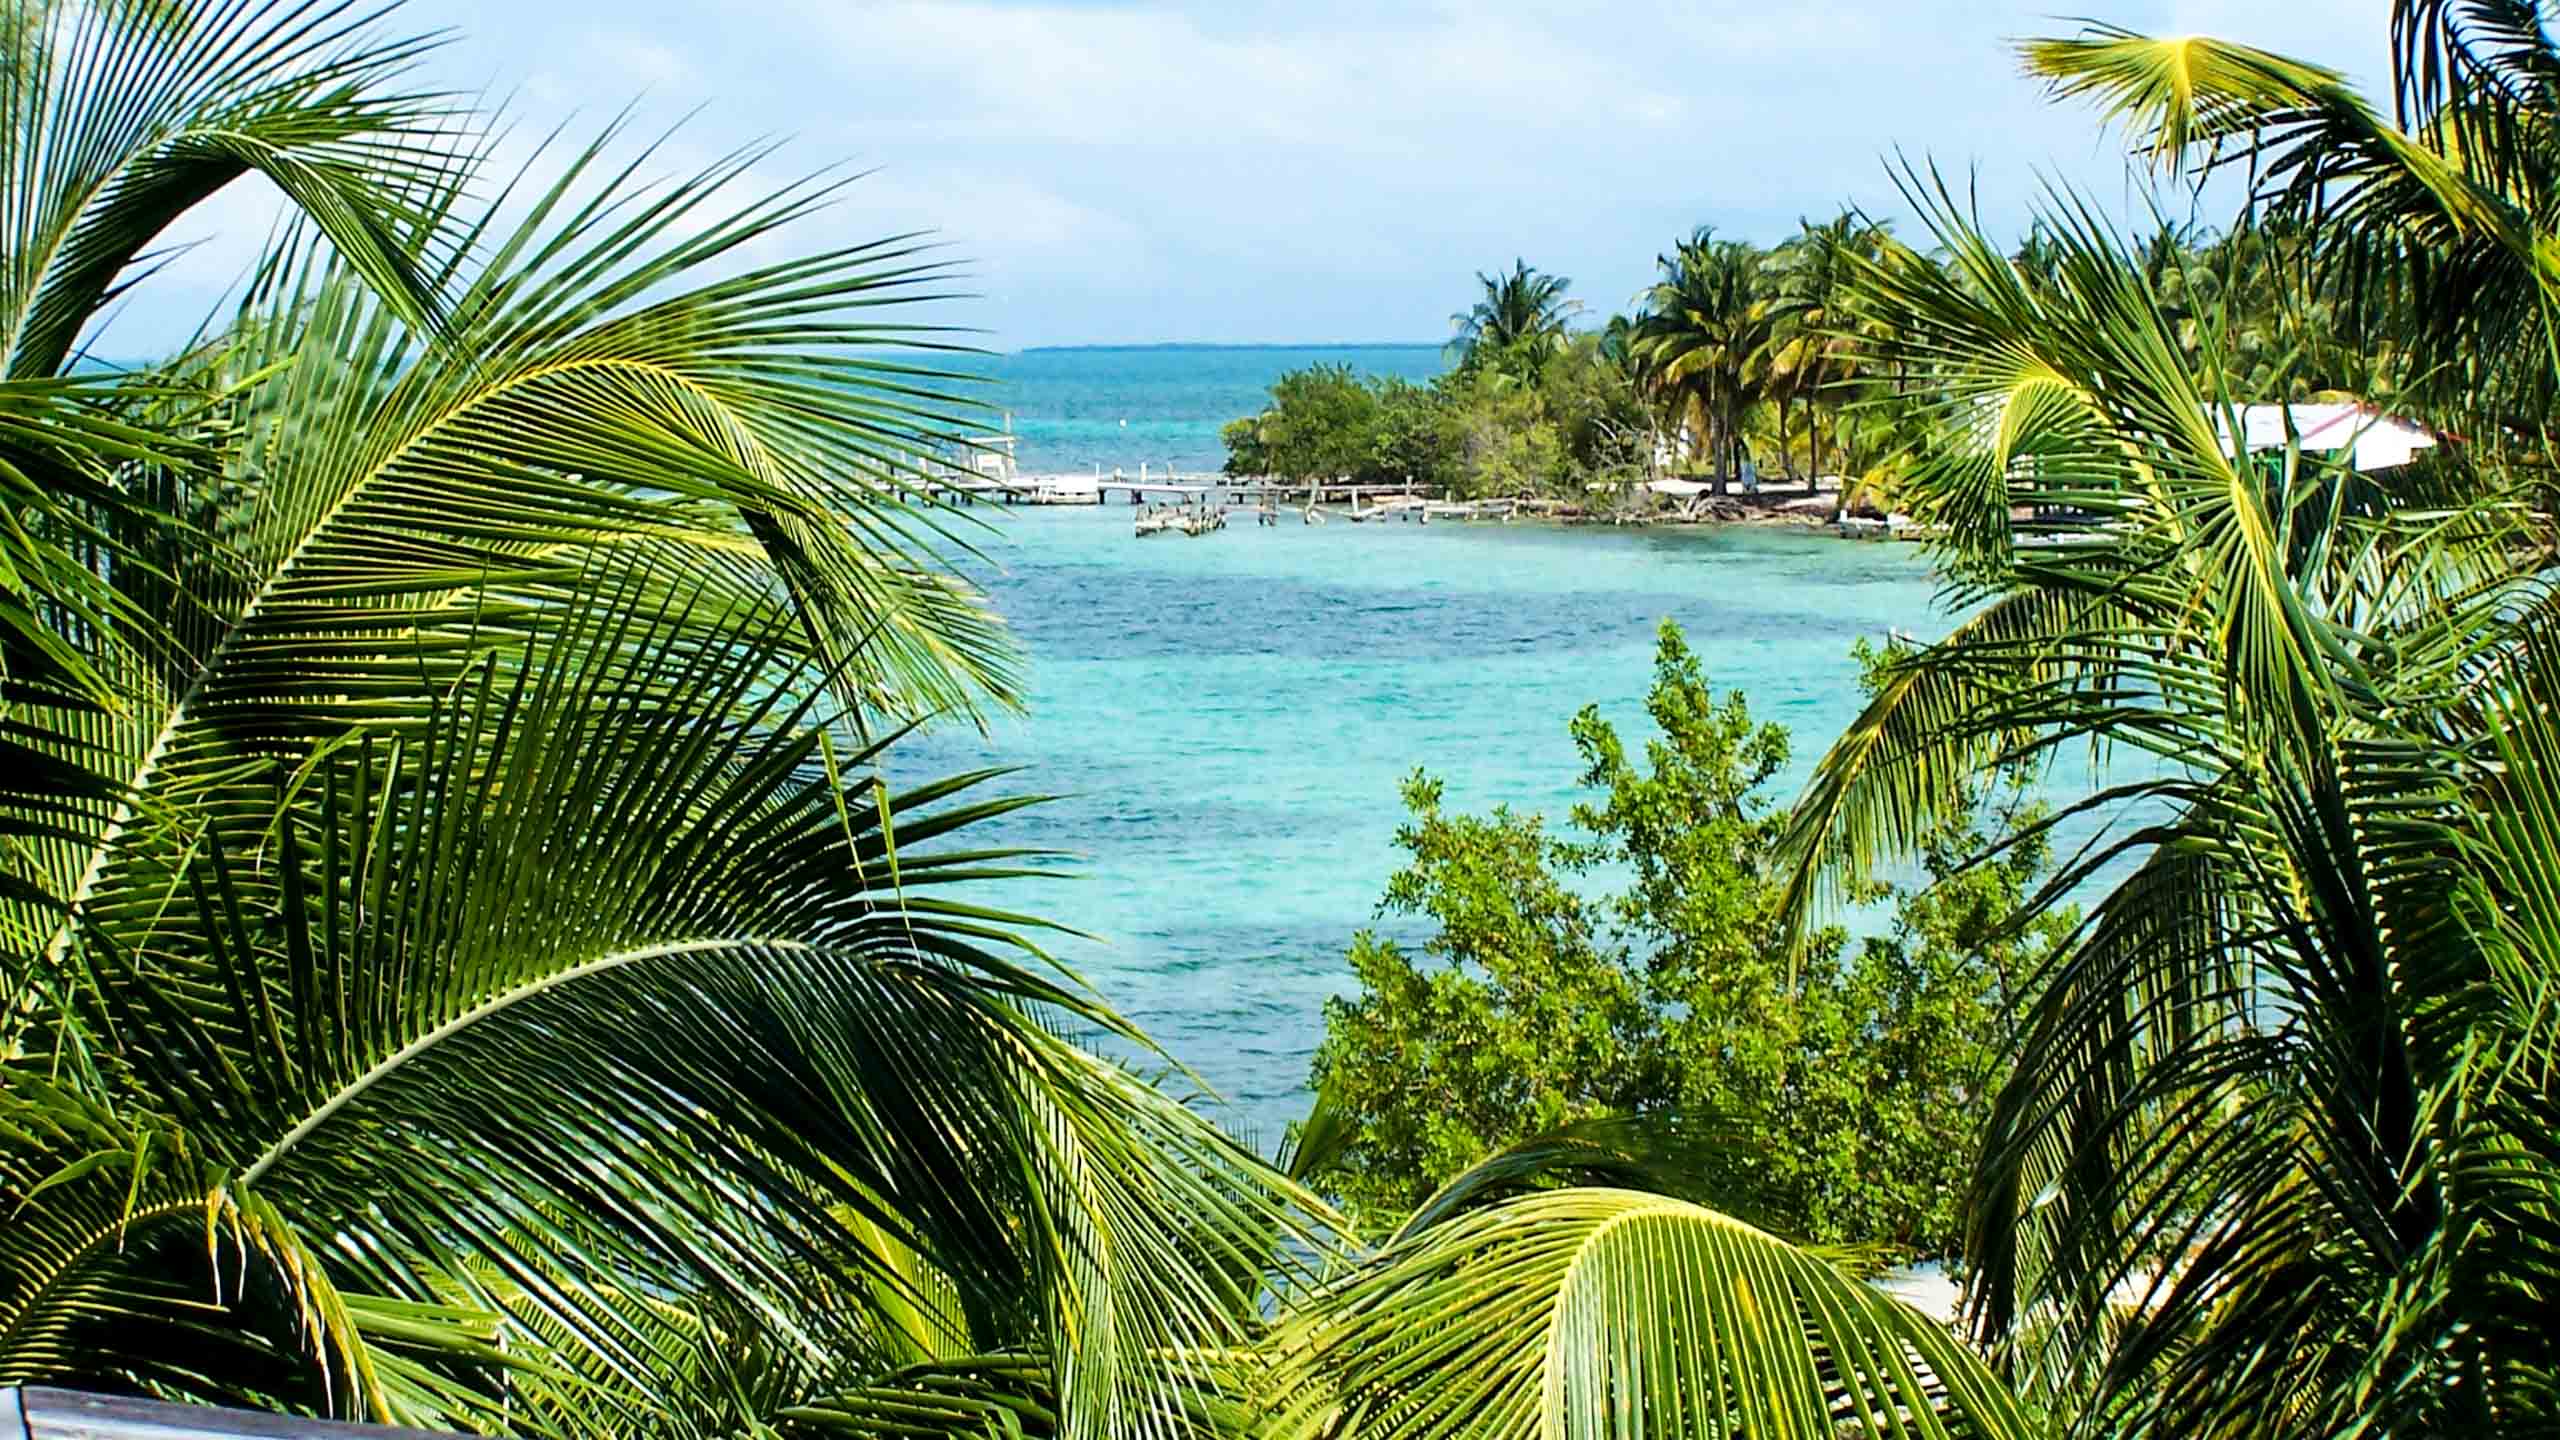 View of Belize ocean through jungle fronds